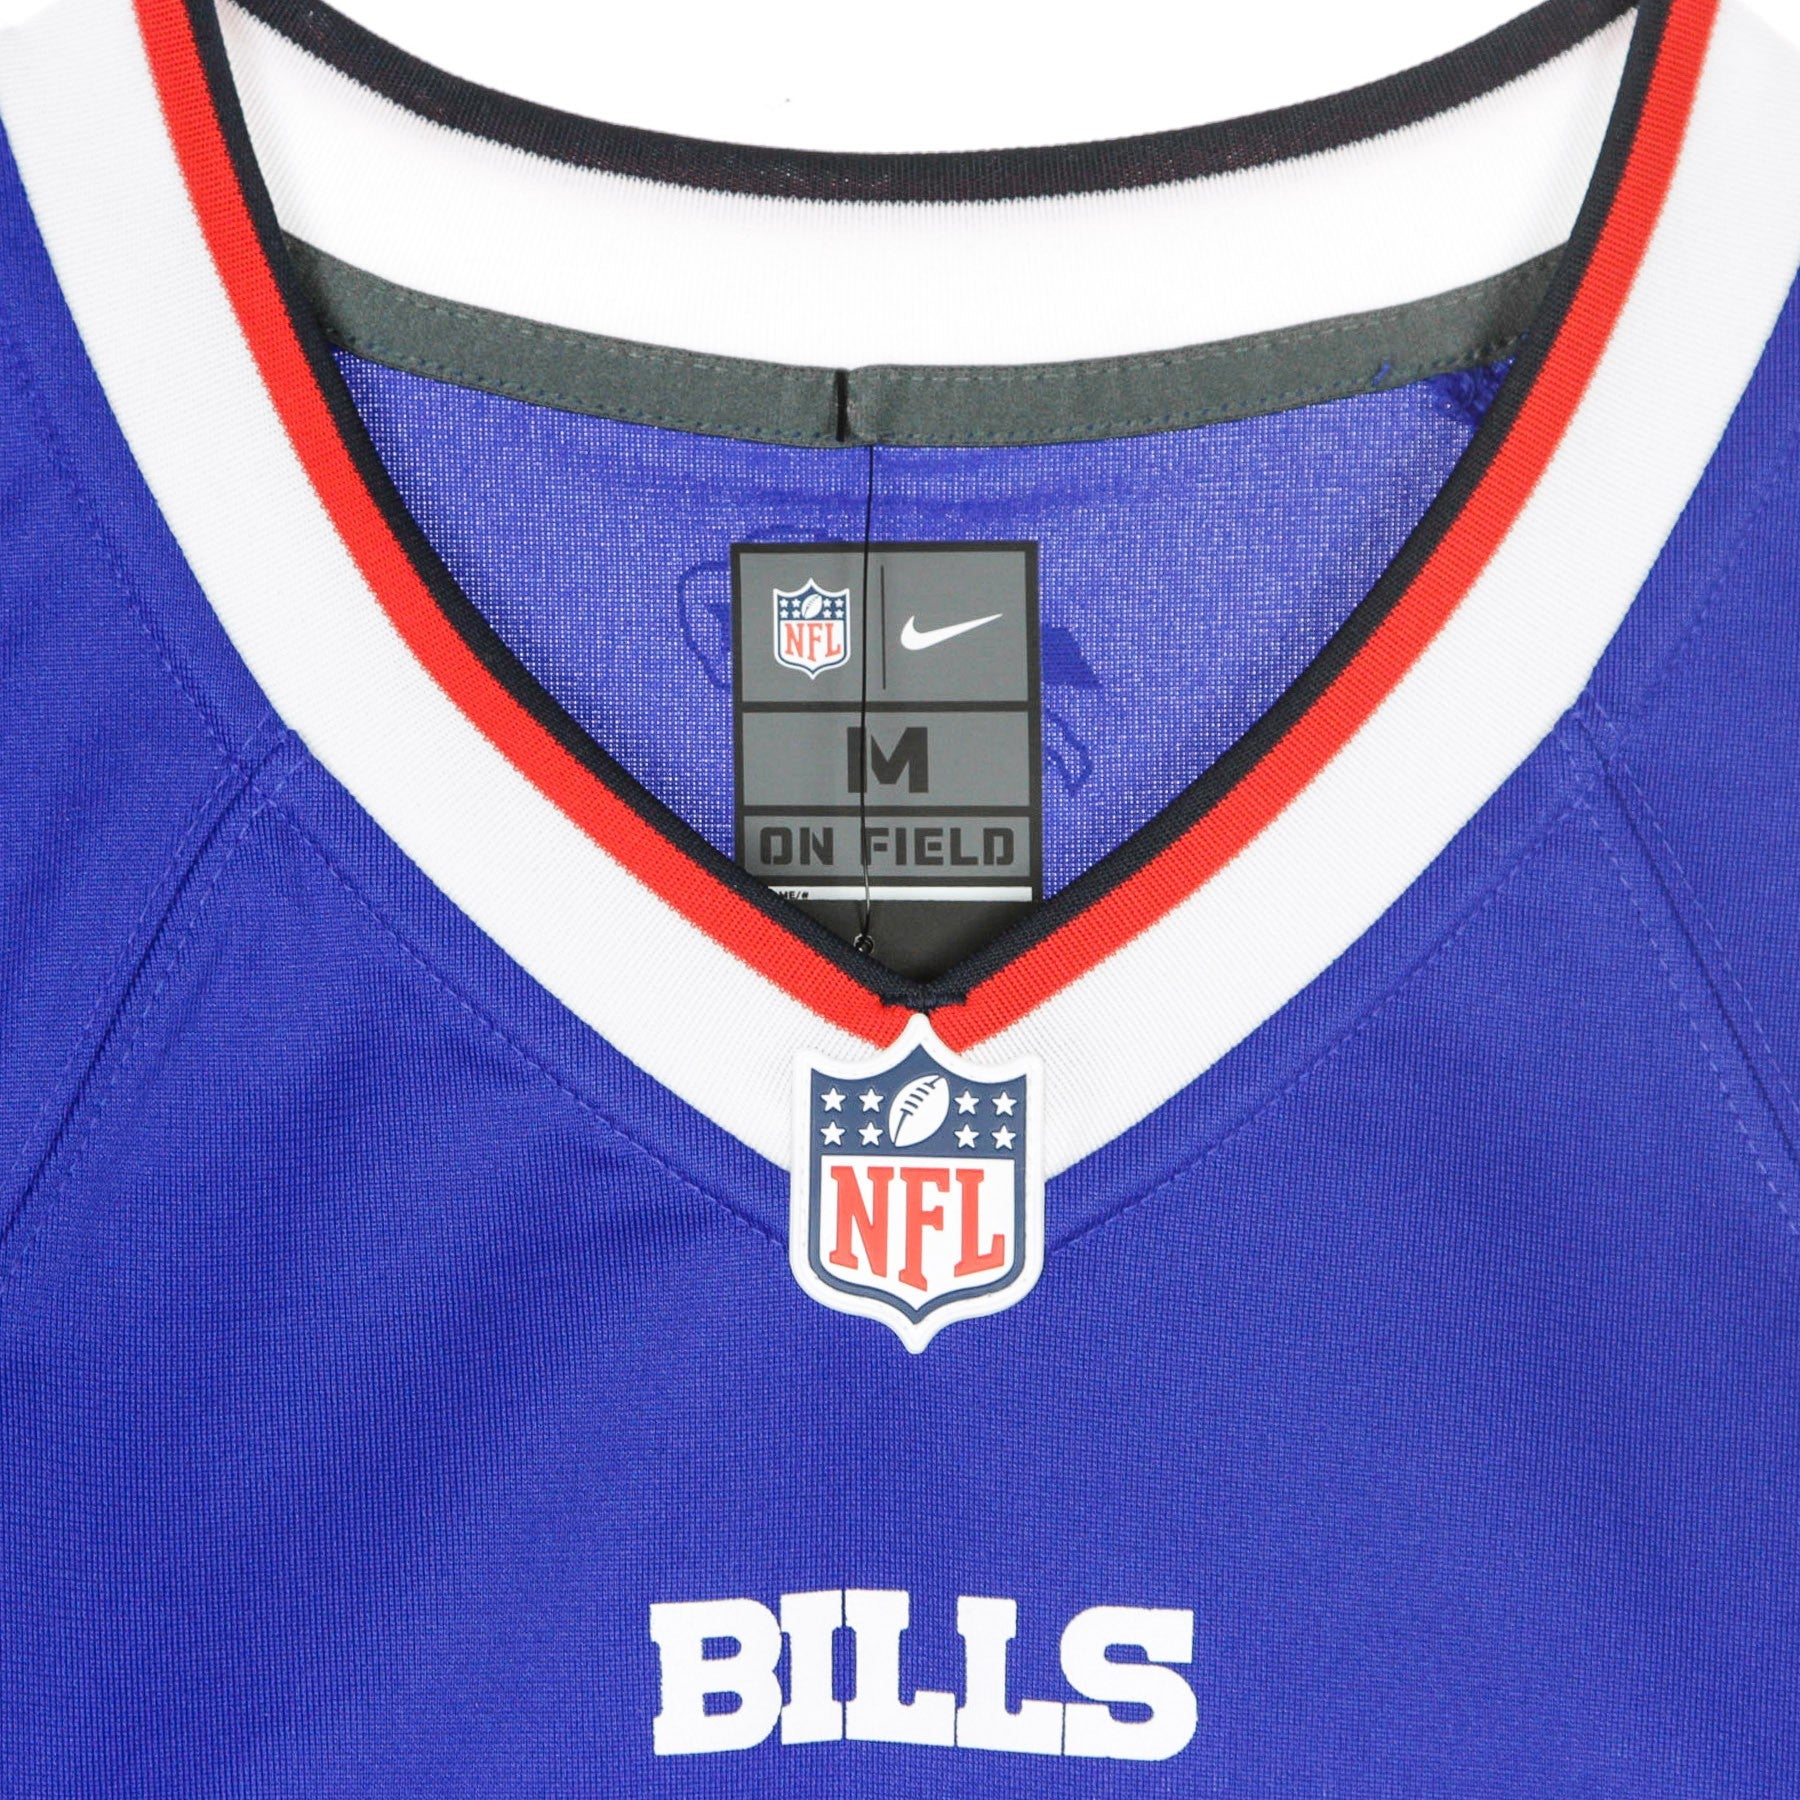 American Football Jacket Men's NFL Game Team Color Jersey No.17 Allen Bufbil